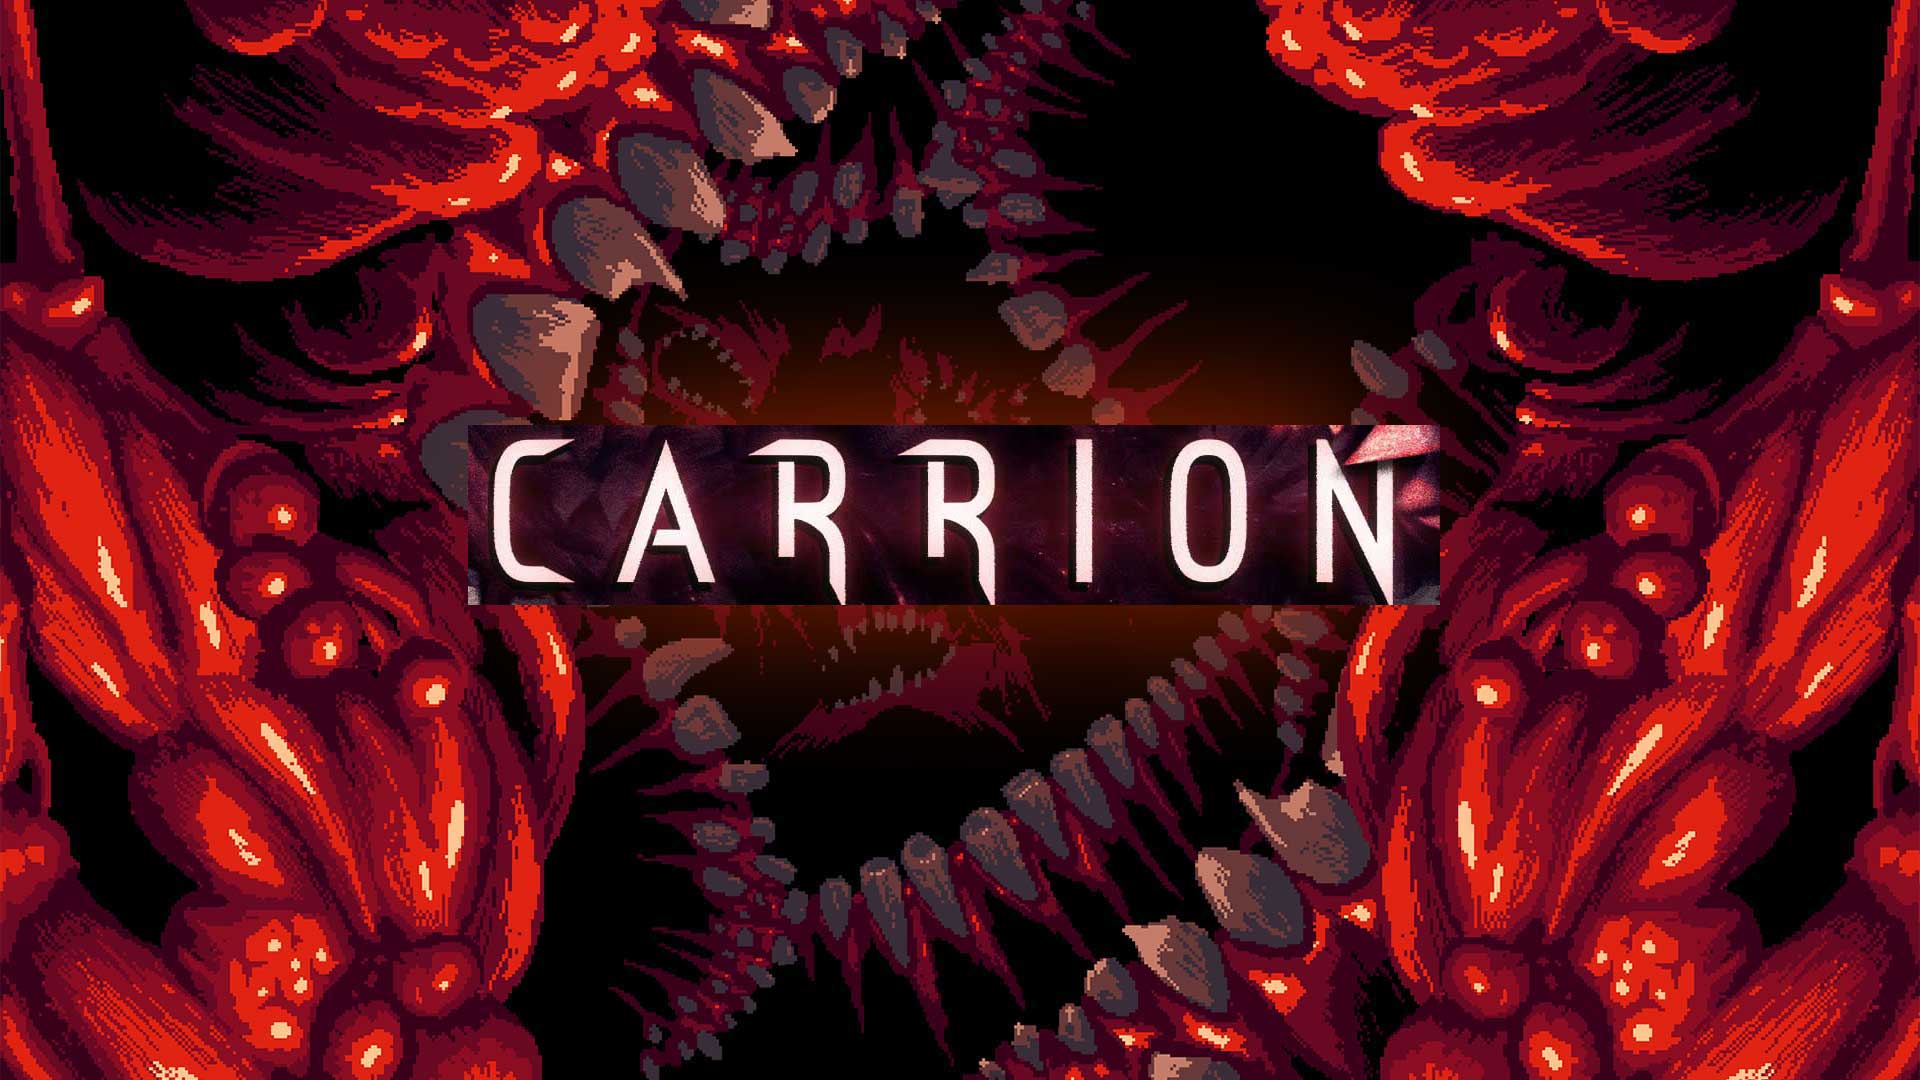 CARRION Release Ab sofort geht’s auf Menschenjagd gaminggrounds.de